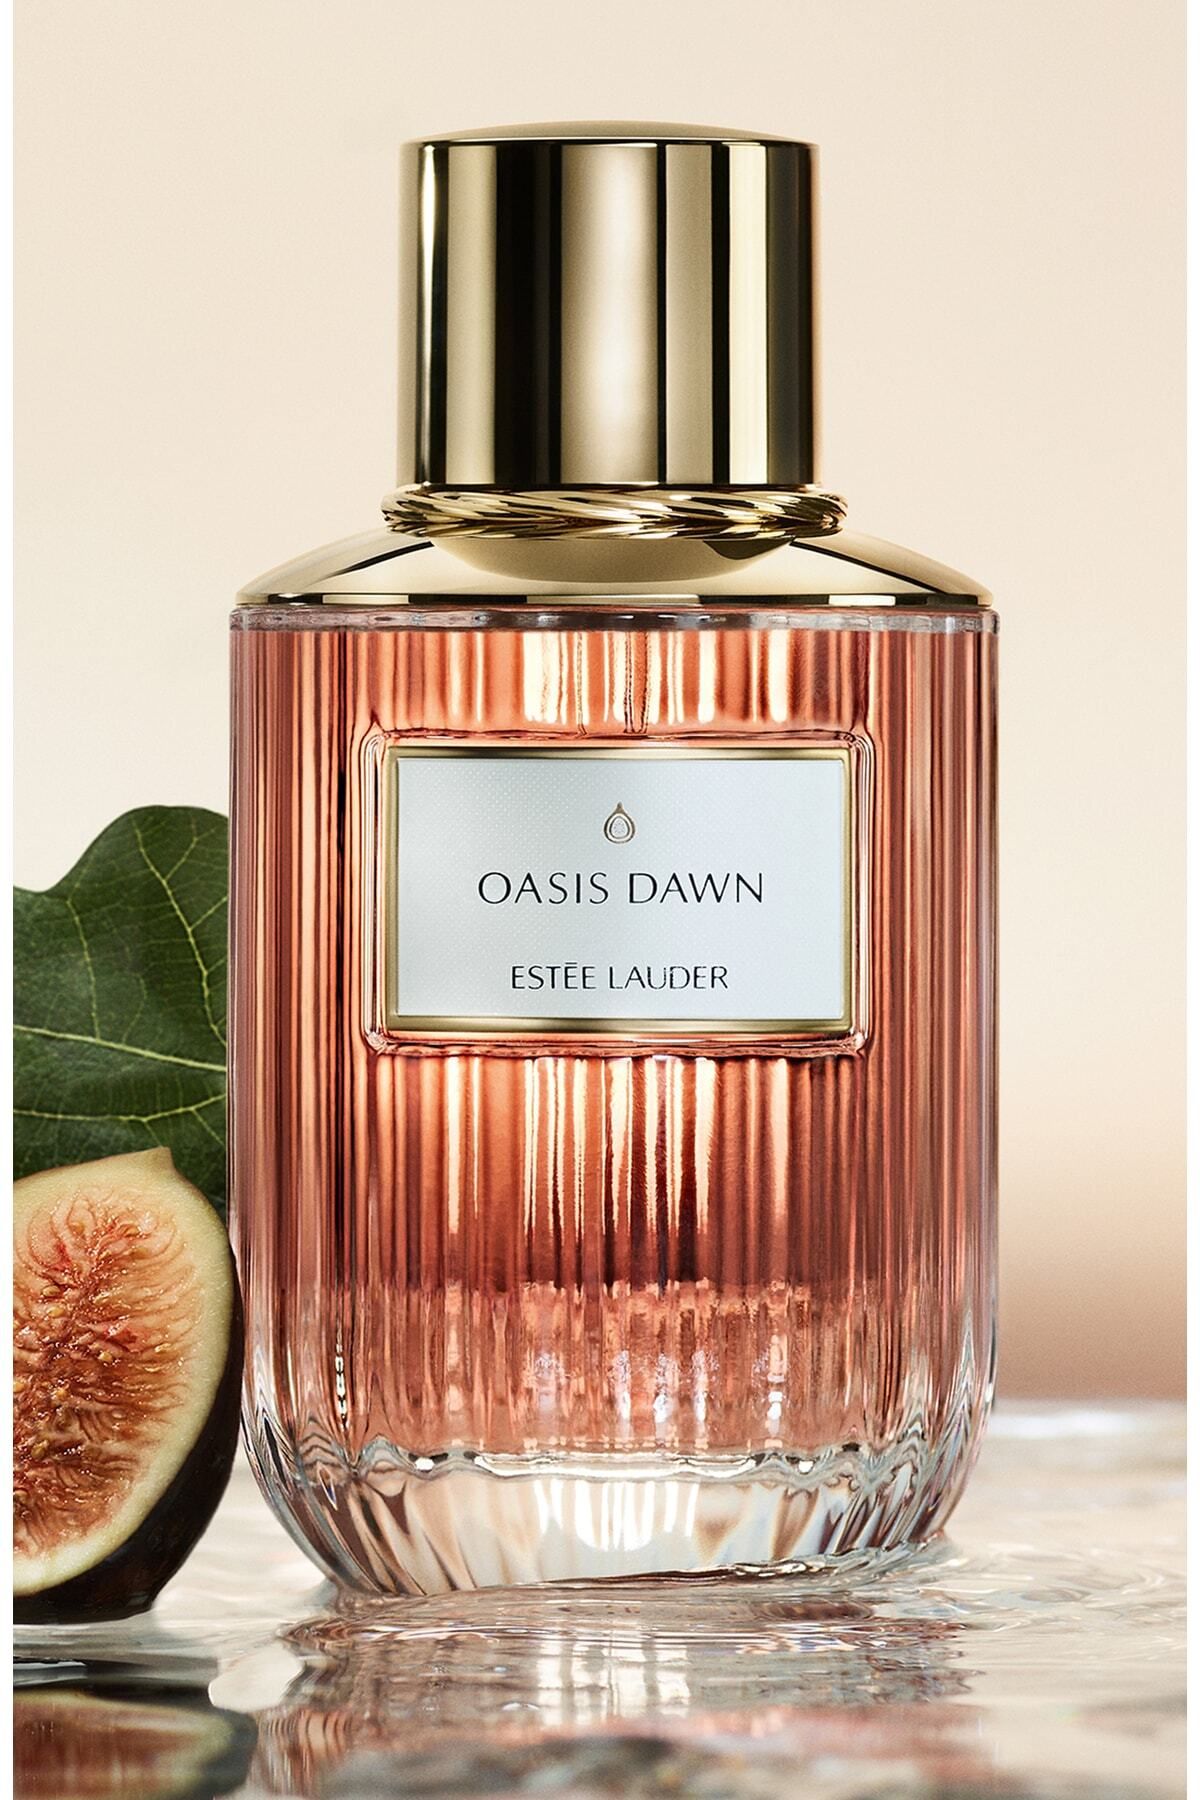 Estee Lauder Oasis Dawn ادوپرفیوم 100 ml عطر زنانه - مجموعه عطرهای لوکس